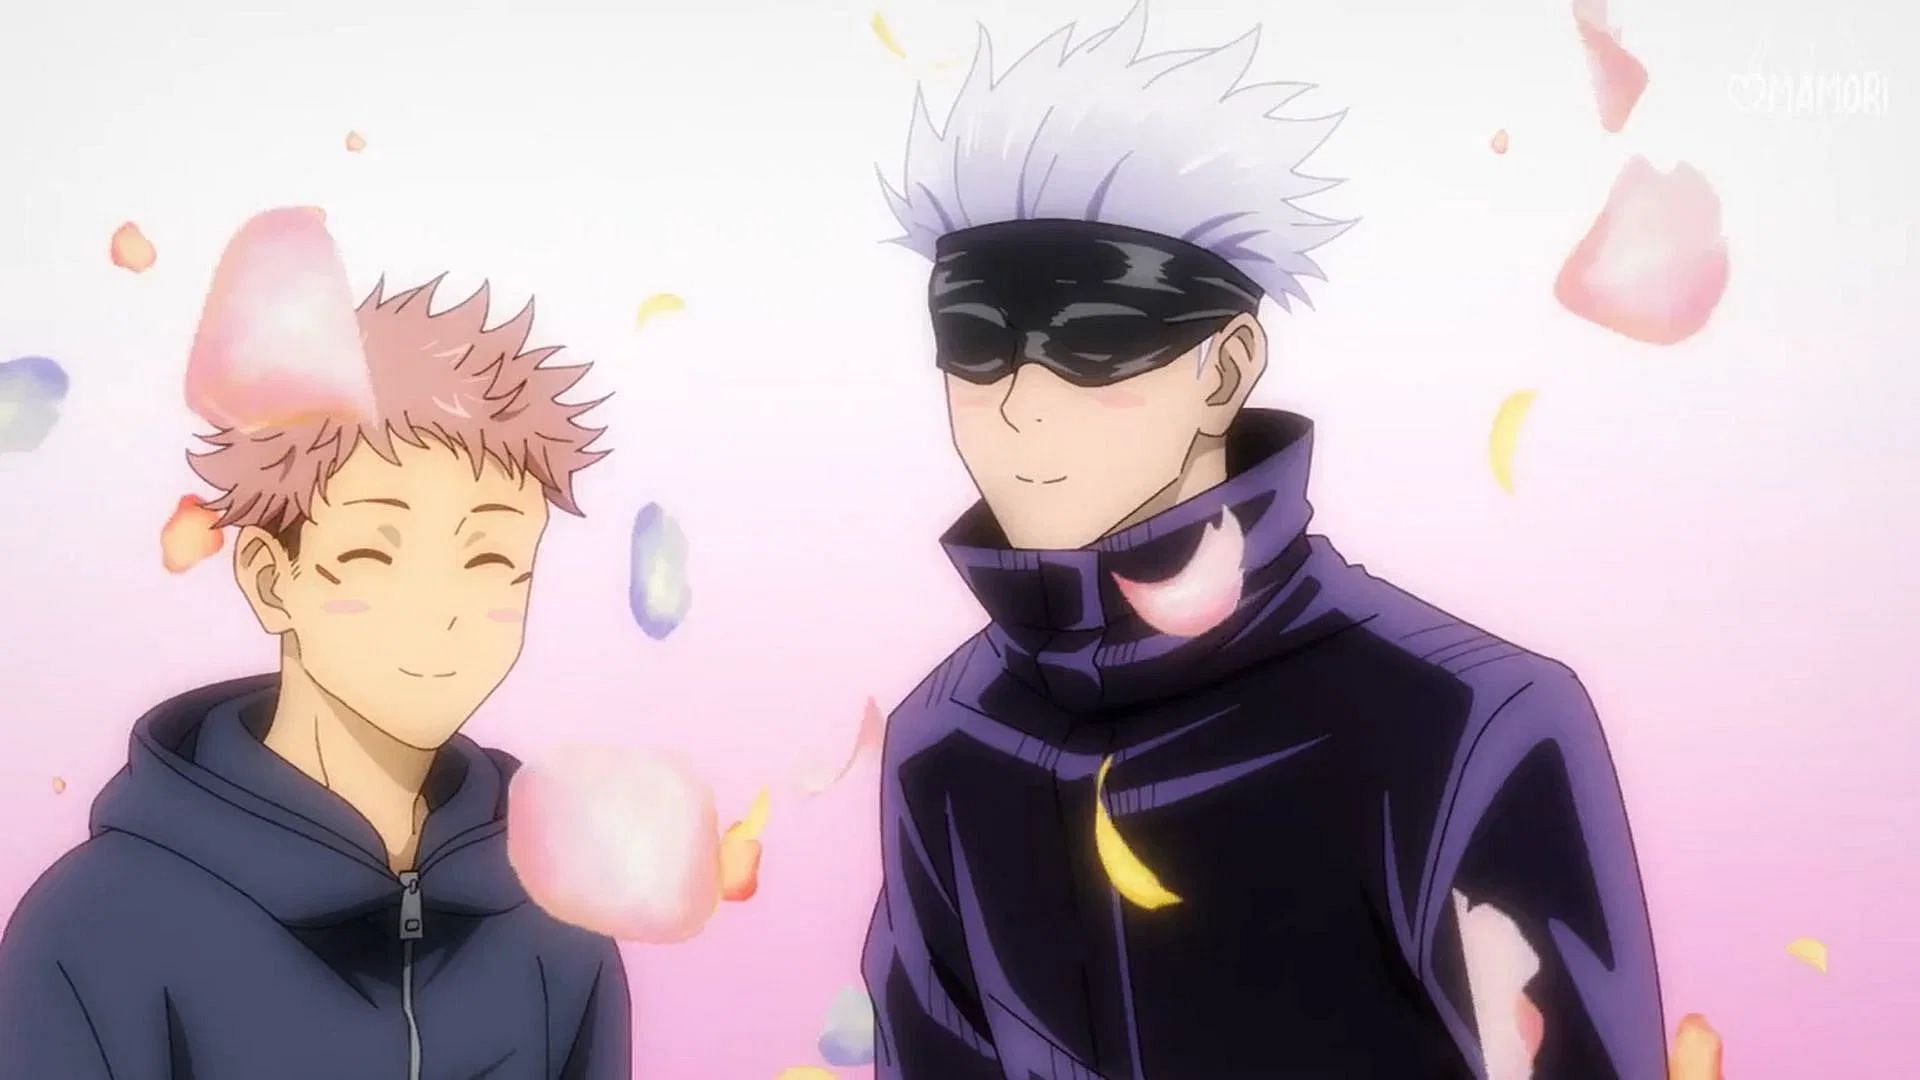 Gojo and Yuji as seen in the anime (image via MAPPA)